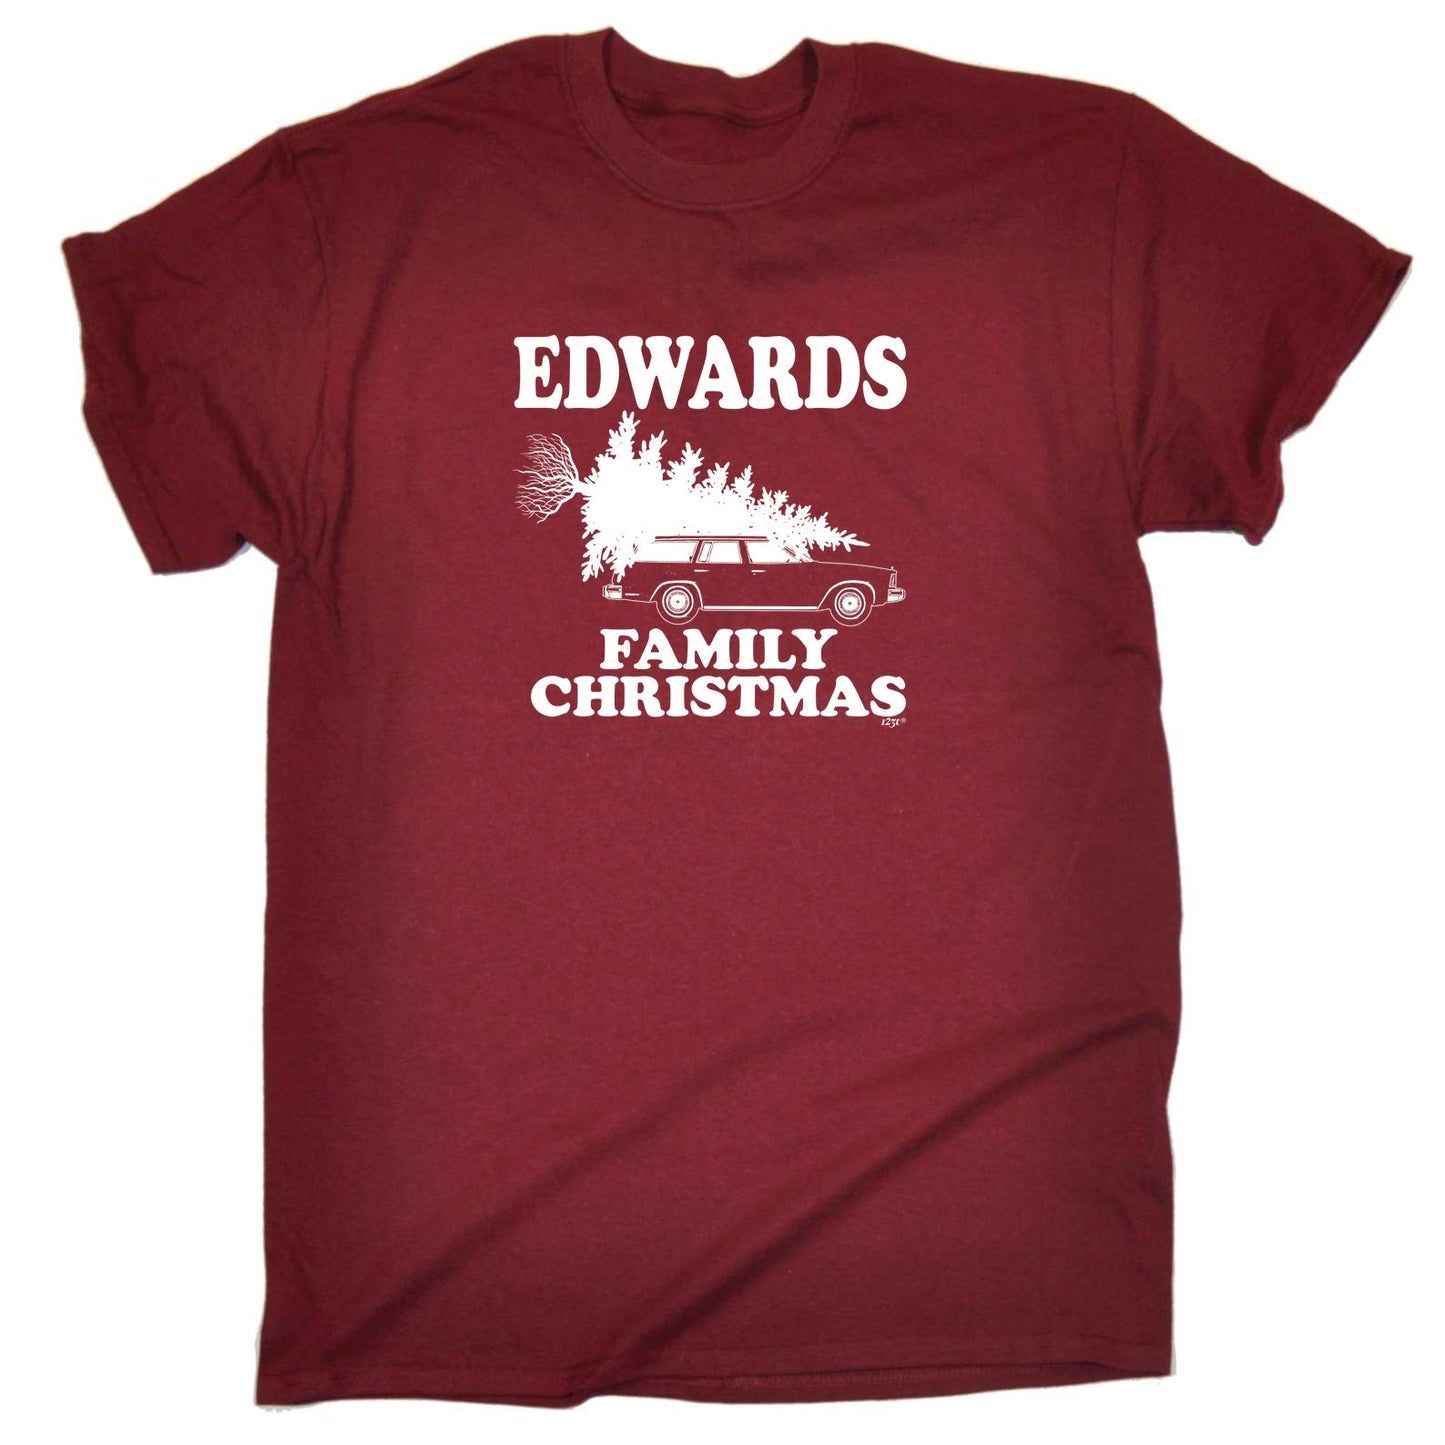 Family Christmas Edwards - Mens Xmas Novelty T-Shirt / T Shirt